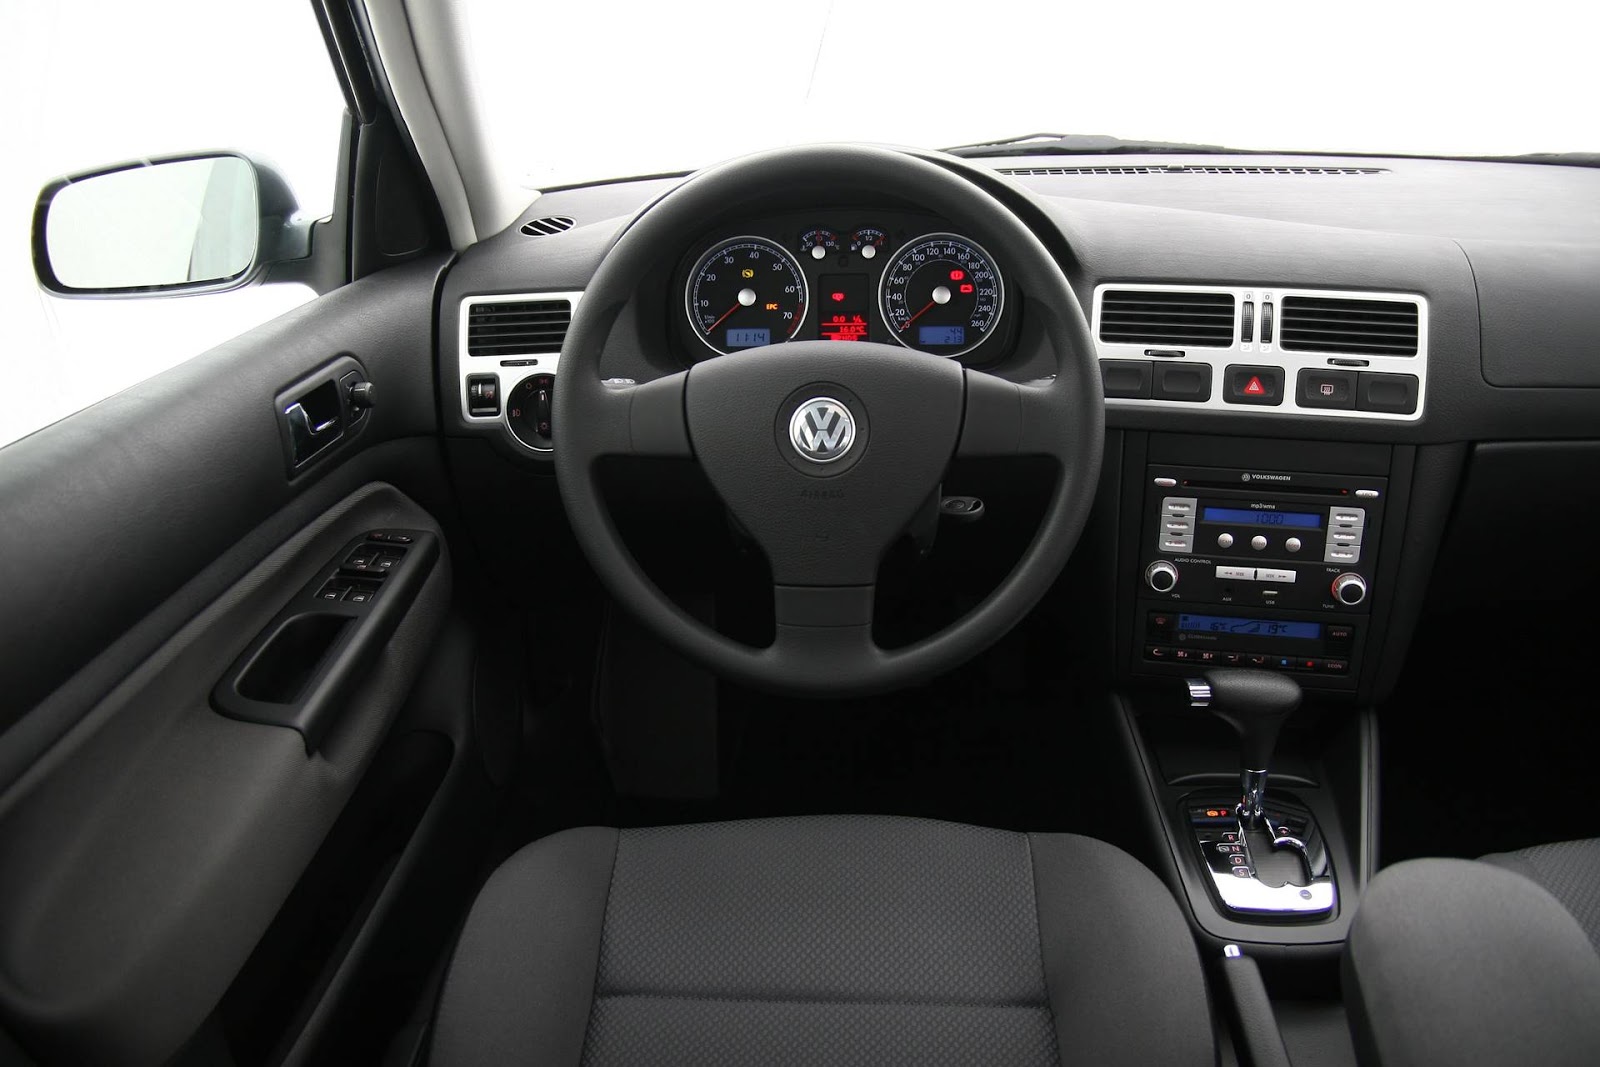 Volkswagen Bora interior - Cockpit